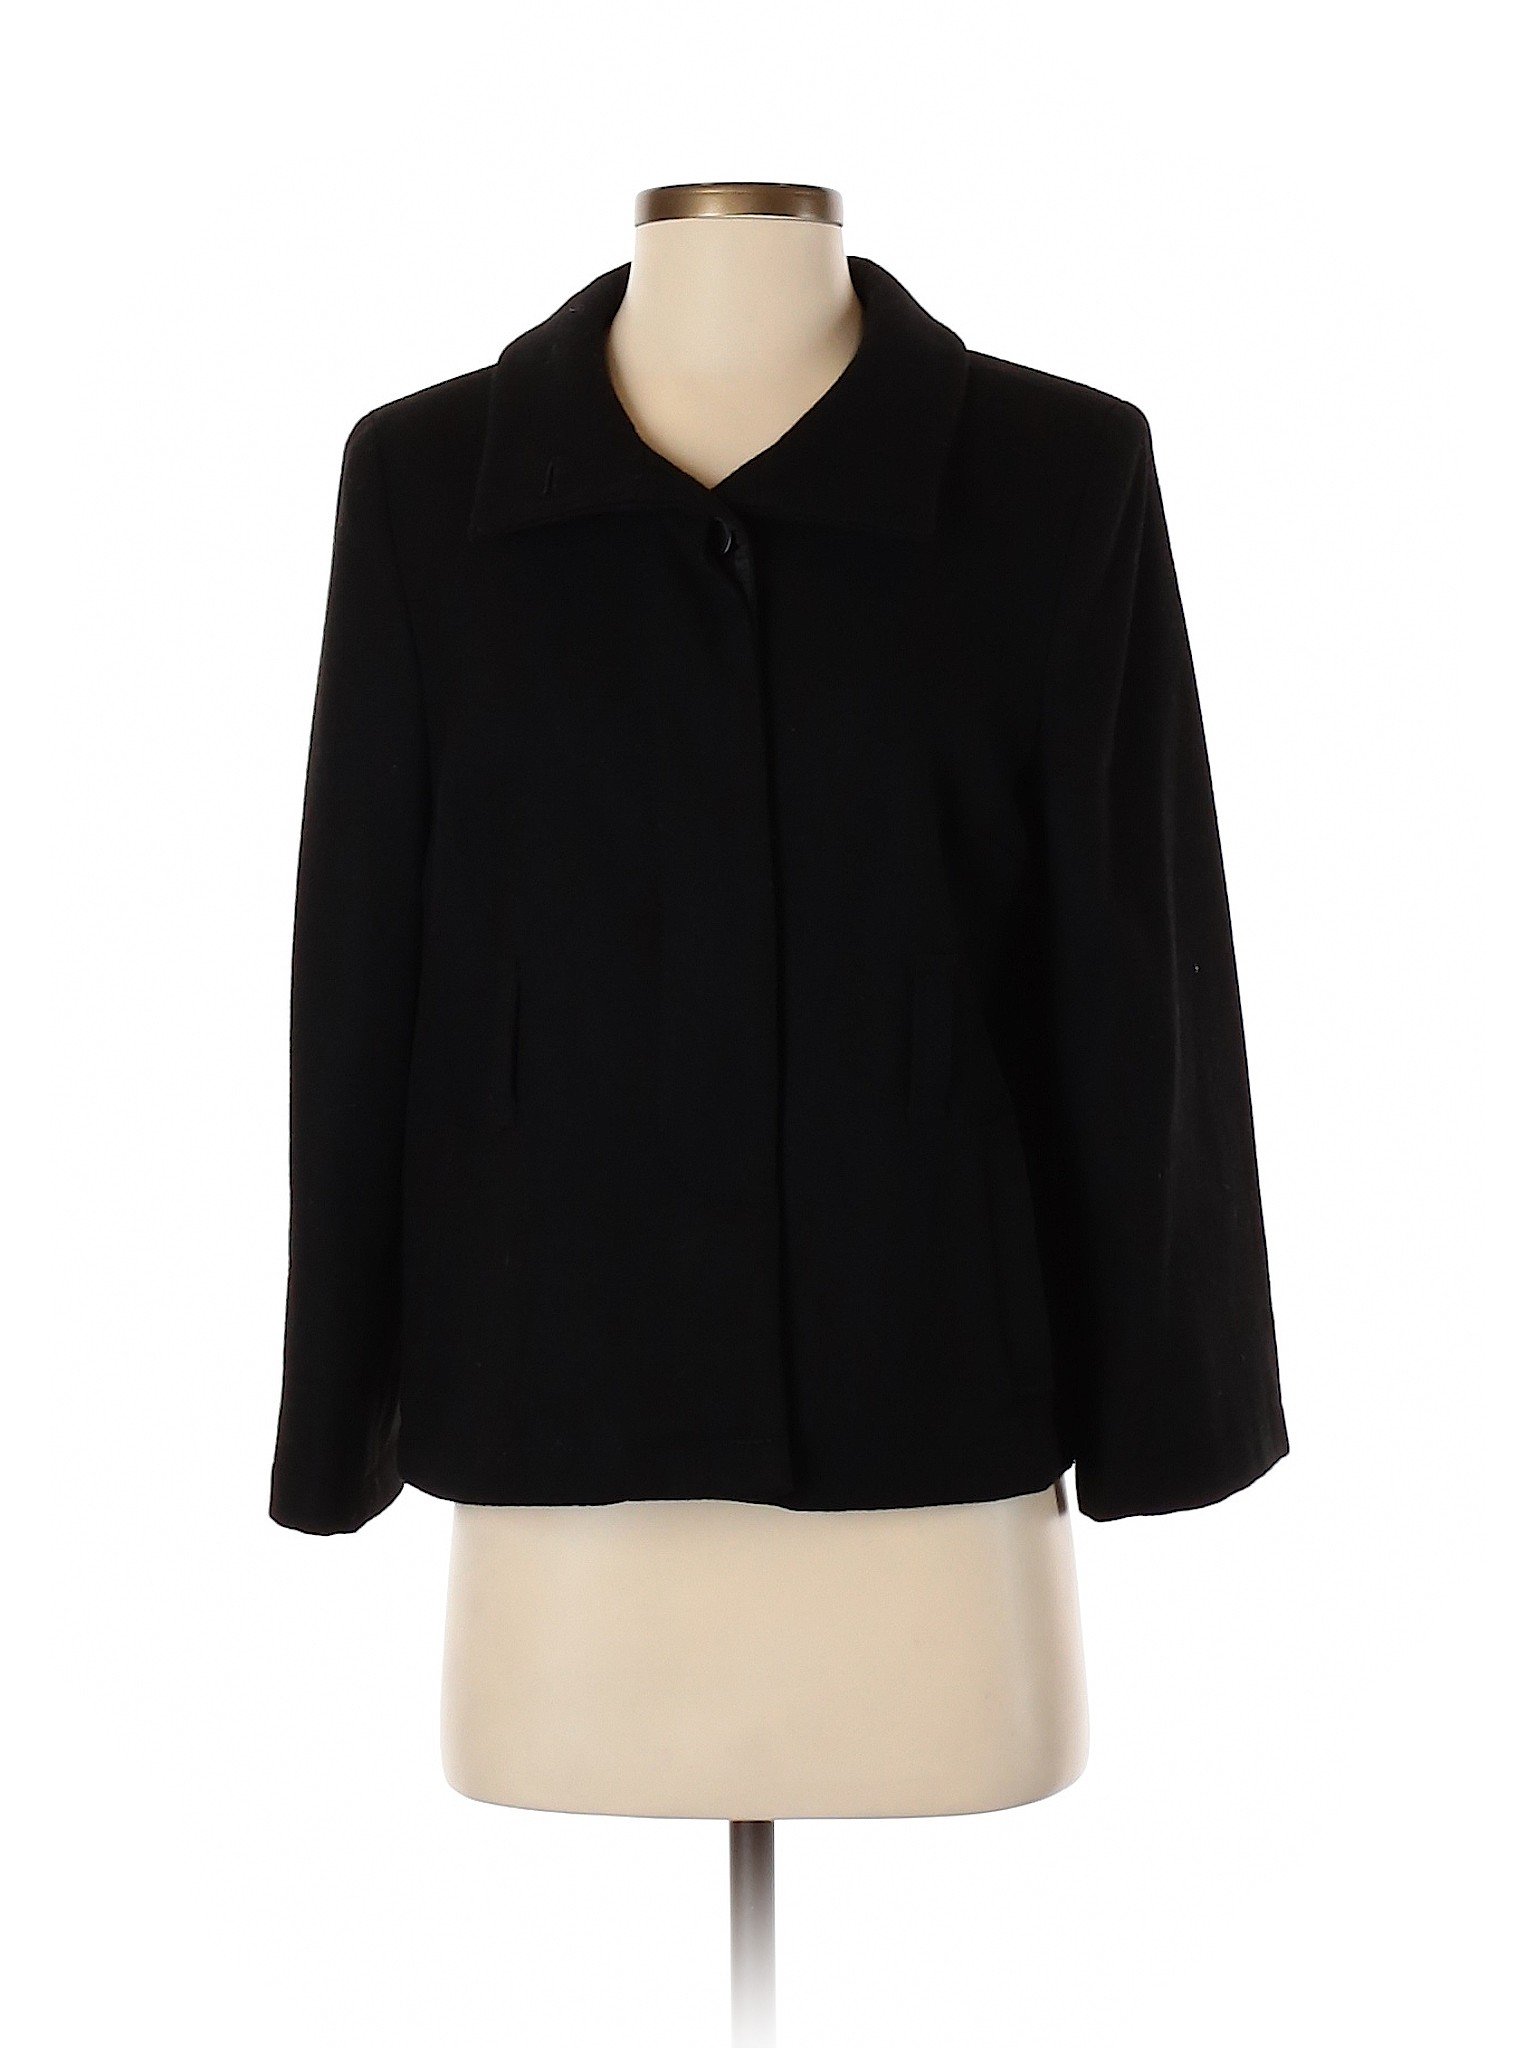 Old Navy Women Black Wool Coat S | eBay